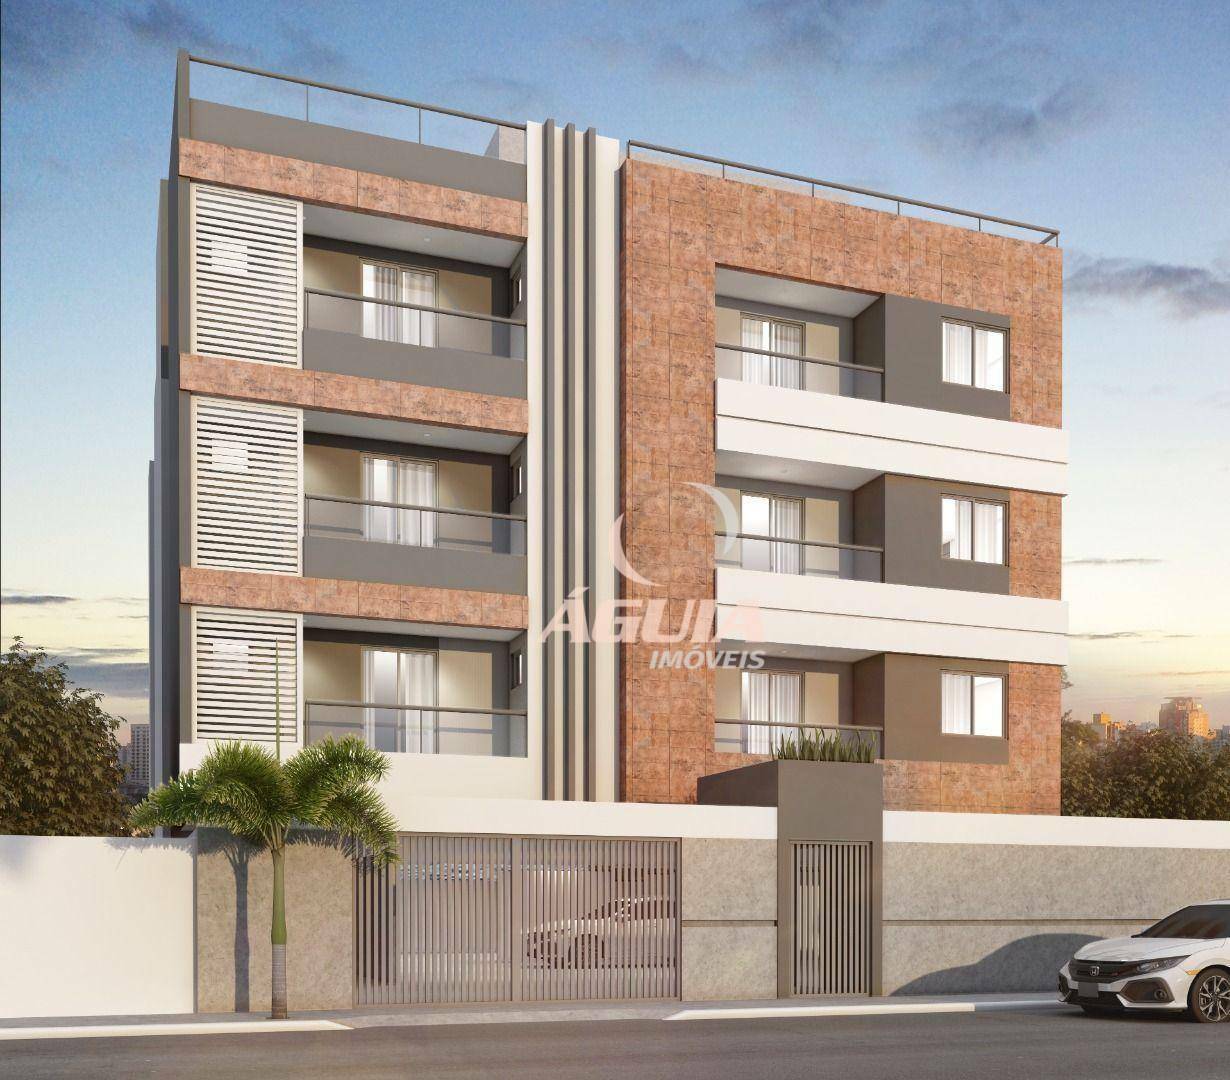 Cobertura com 2 dormitórios à venda, 60 m² + 60 m² por R$ 750.000 - Vila Santa Teresa - Santo André/SP